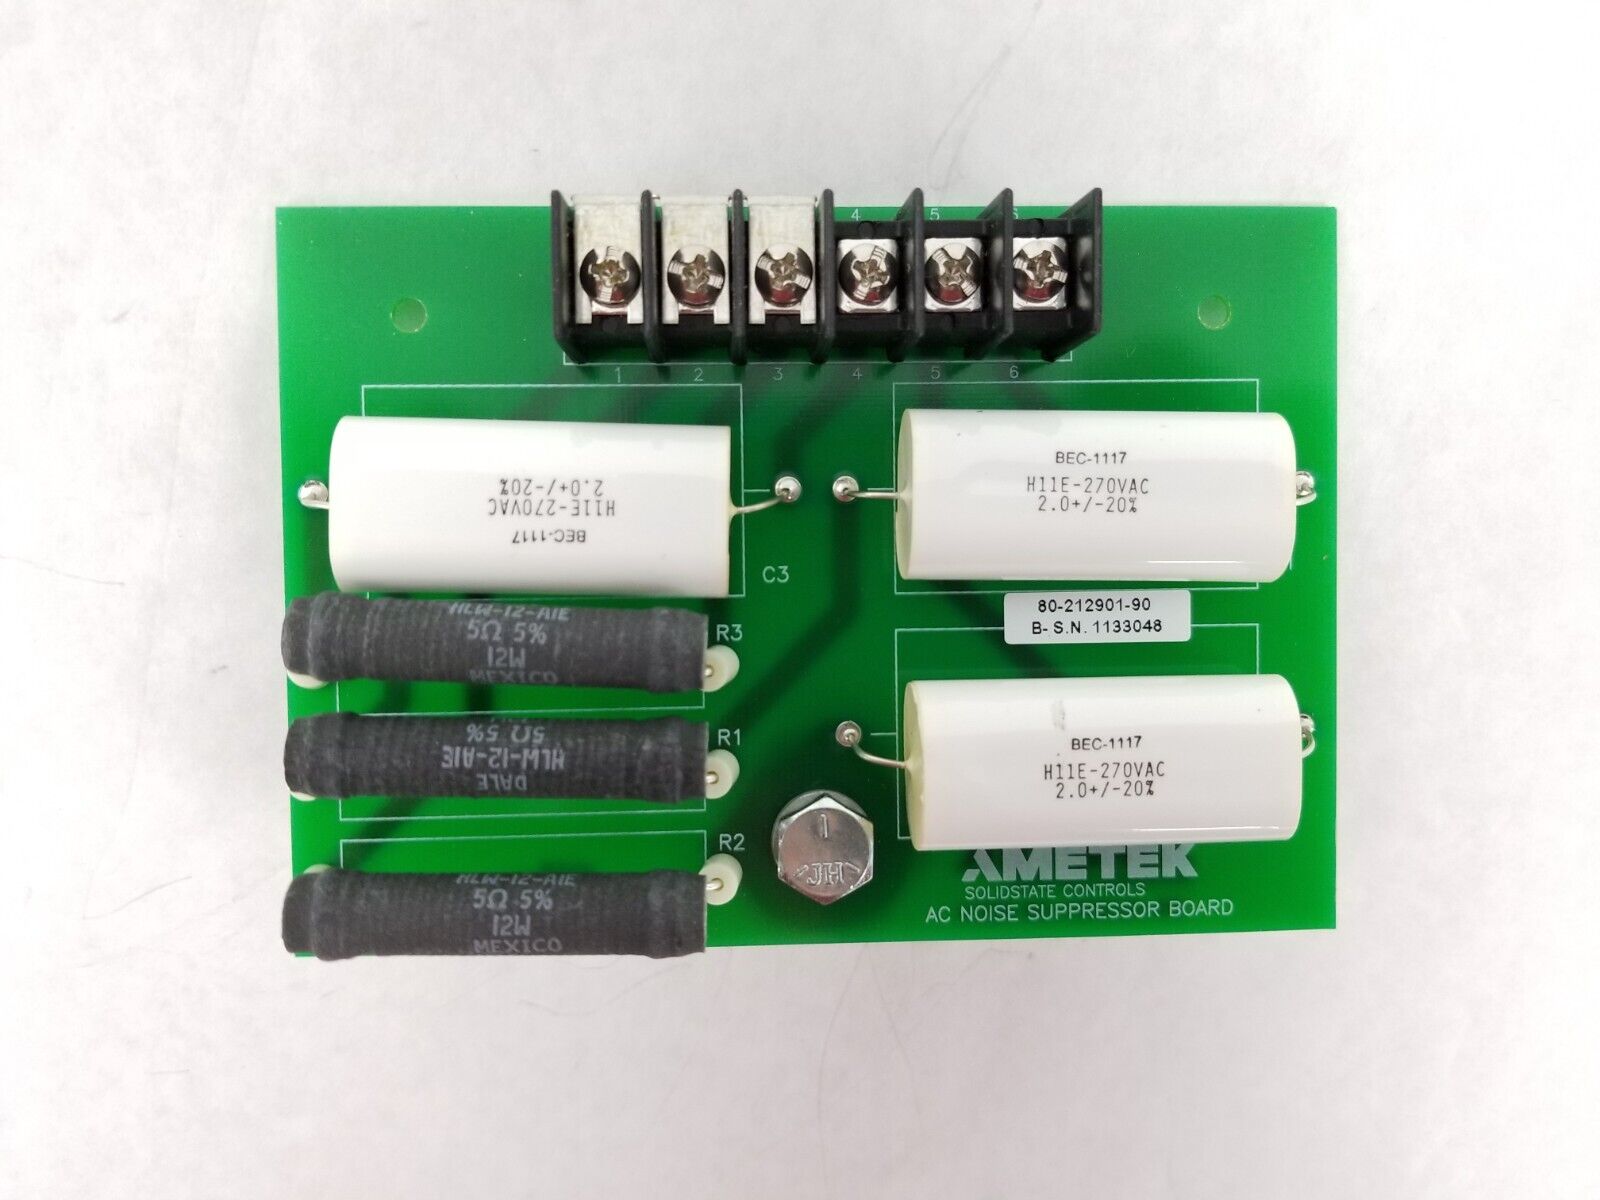 Ametek SolidState Controls 80-212901-90 Ac Noise Suppressor Board Rev A